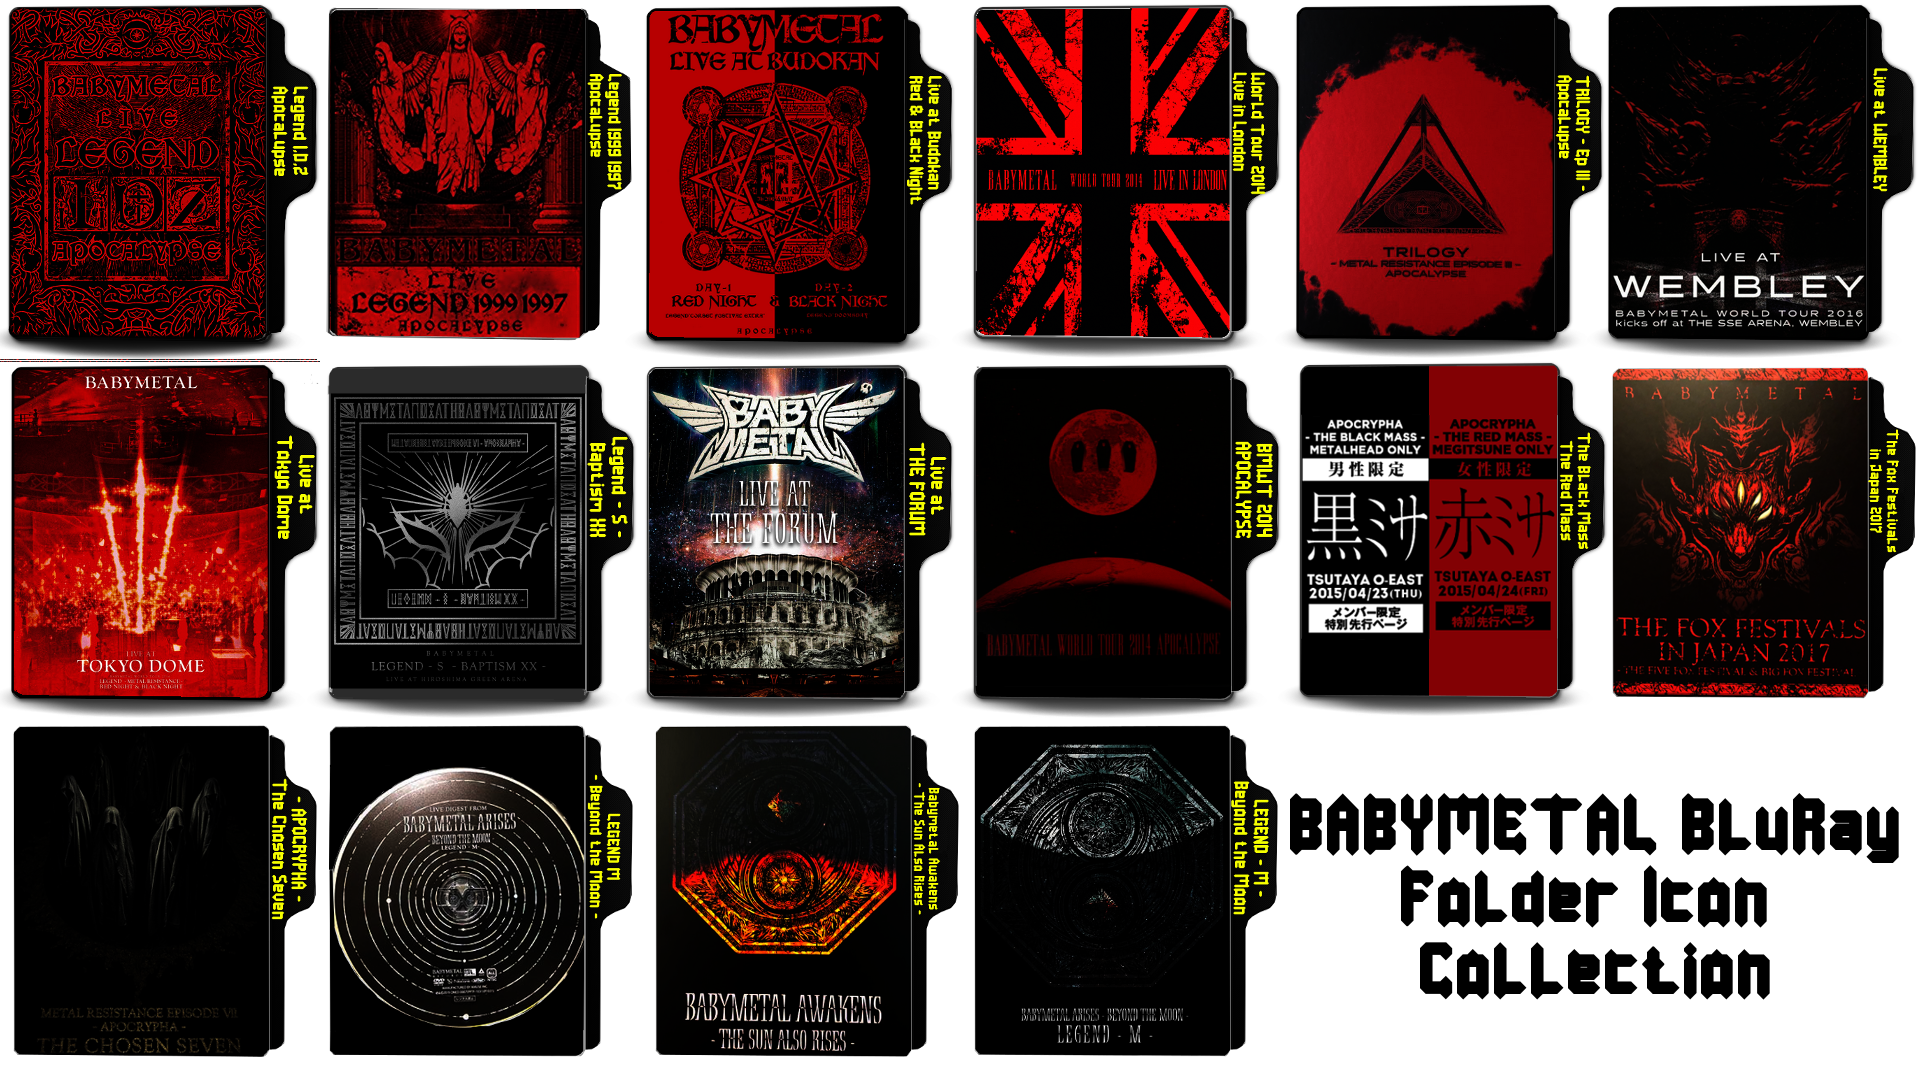 Babymetal Blu Ray Folder Icon Collection Vol. 1 by lonewolfsg on